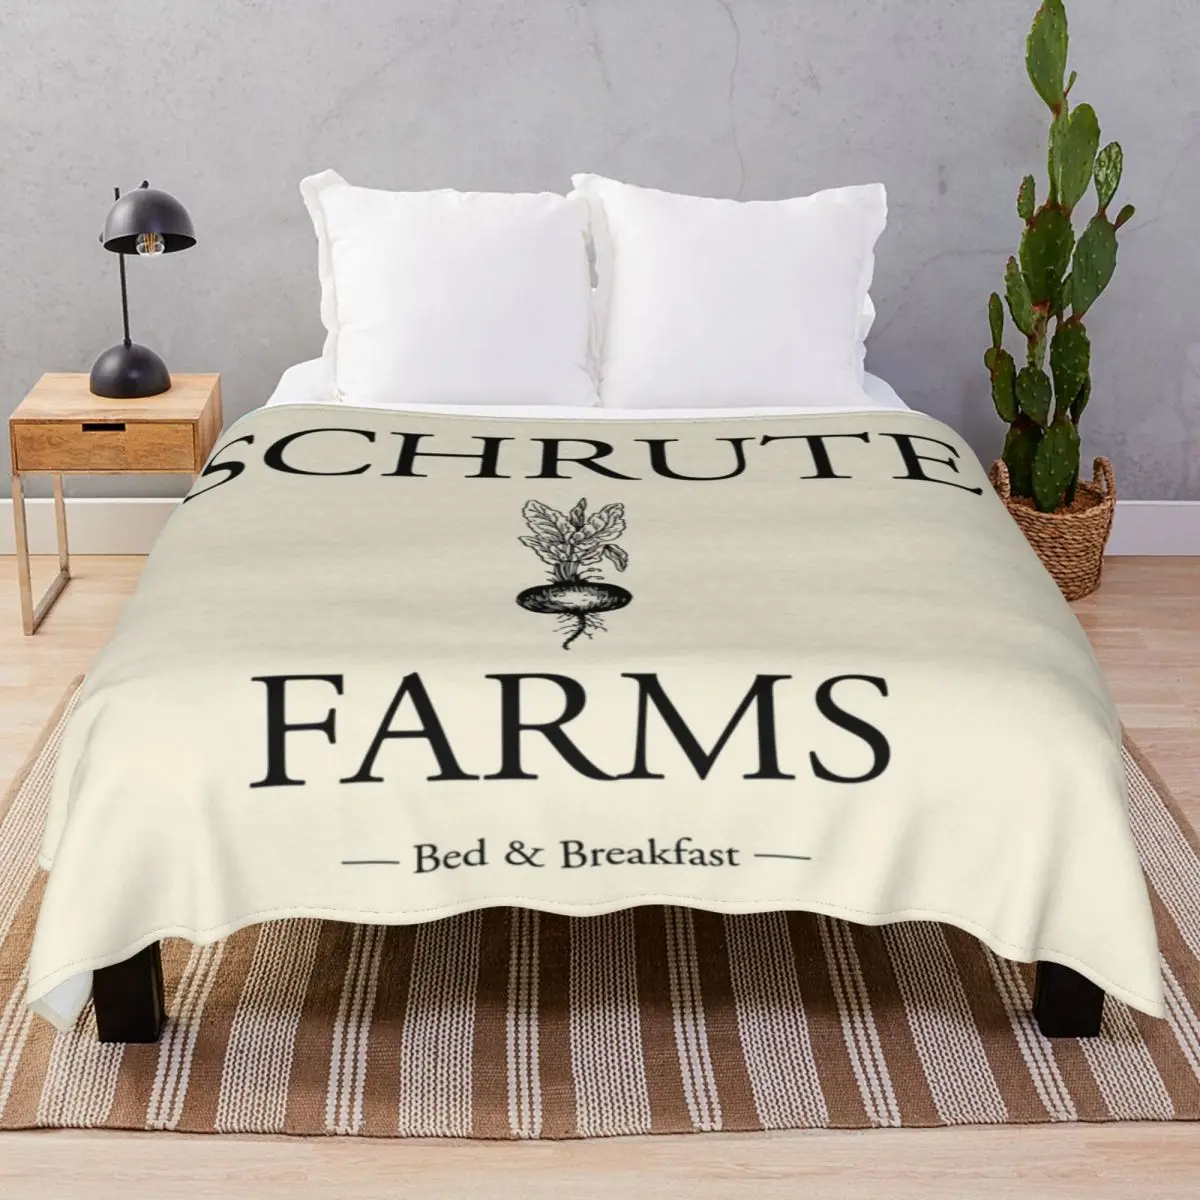 Schrute Farms Blanket Fleece Summer Super Warm Throw Blankets for Bedding Sofa Camp Cinema